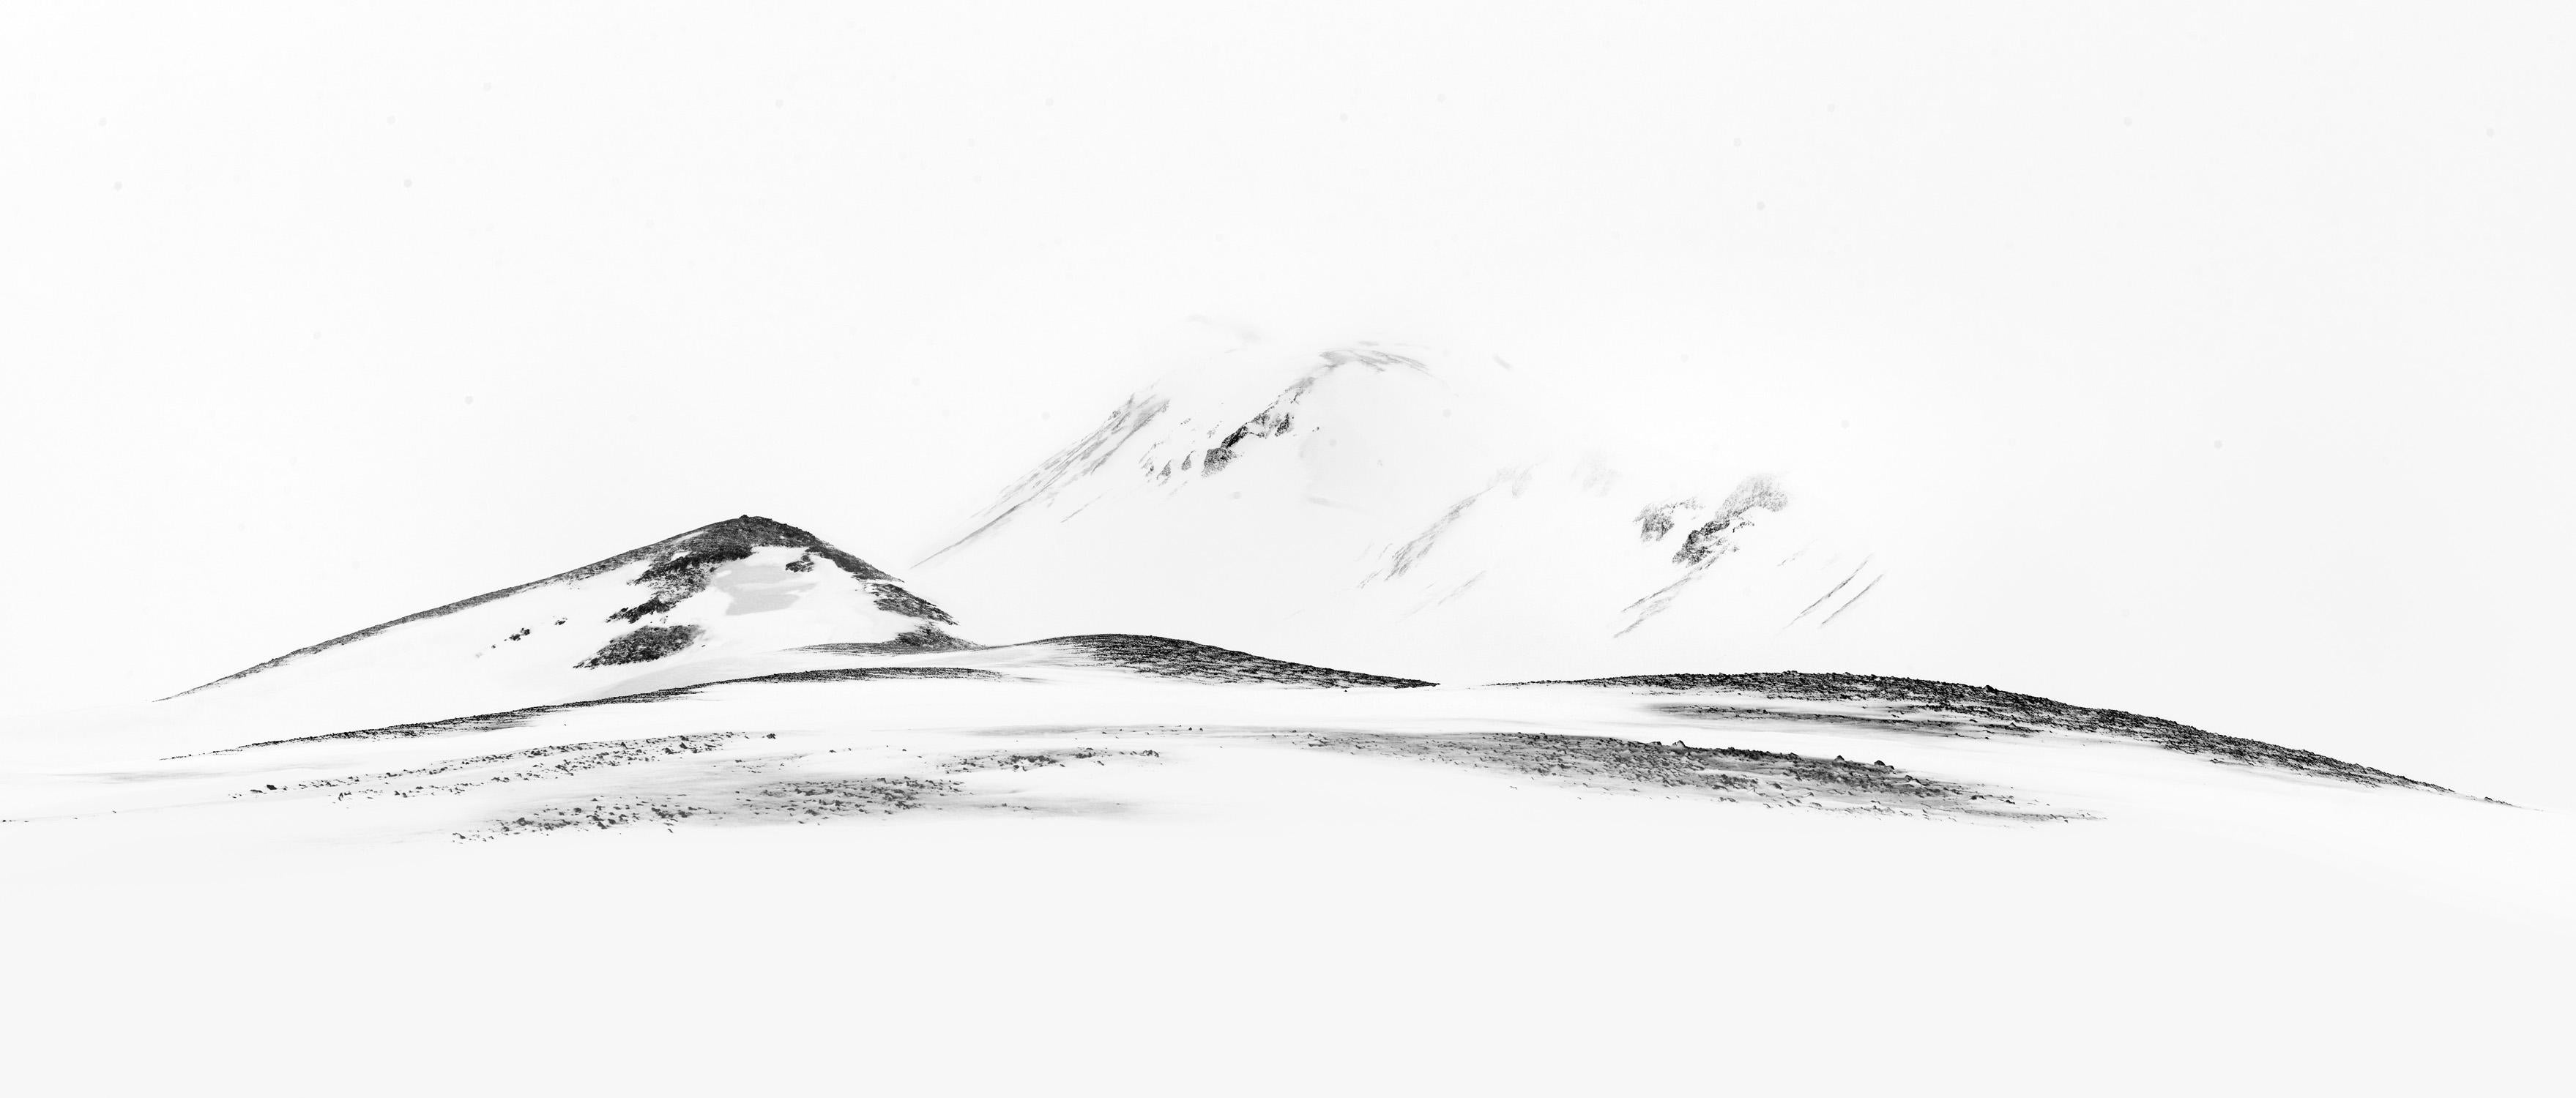 David Burdeny Landscape Photograph – Fjallabak Study 02, Iceland